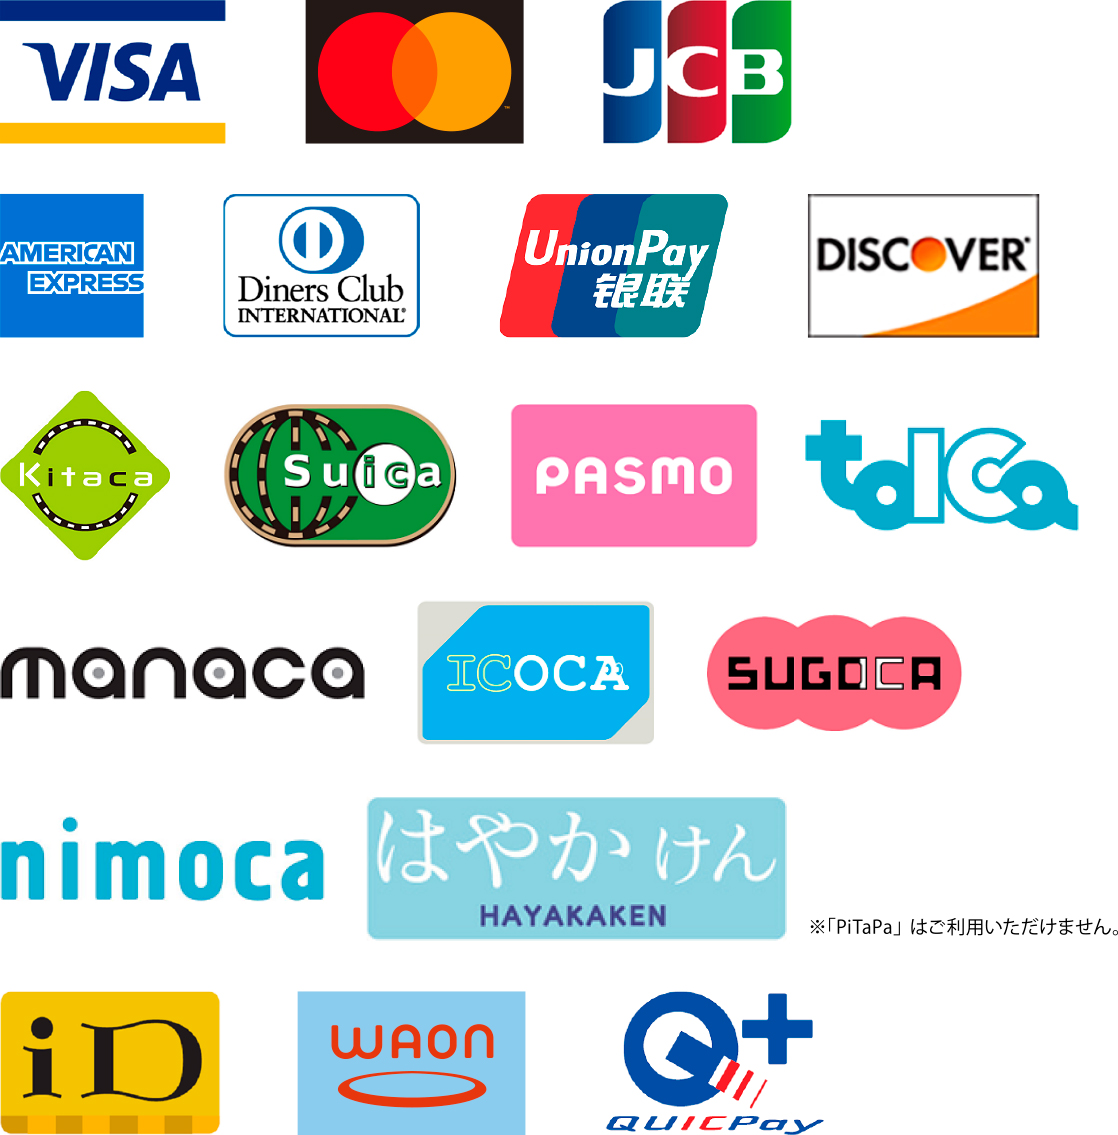 VISA、Mastercard、AMERICAN EXPRESS、JCB、Diners Club、UnionPay(銀聯)、DISCOVER、Kitaca、Suica、PASMO、TOICA、manaca、ICOCA、SUGOCA、nimoca、はやかけん、※「PiTaPa」はご利用いただけません。、ID、WAON、QUIC Pay